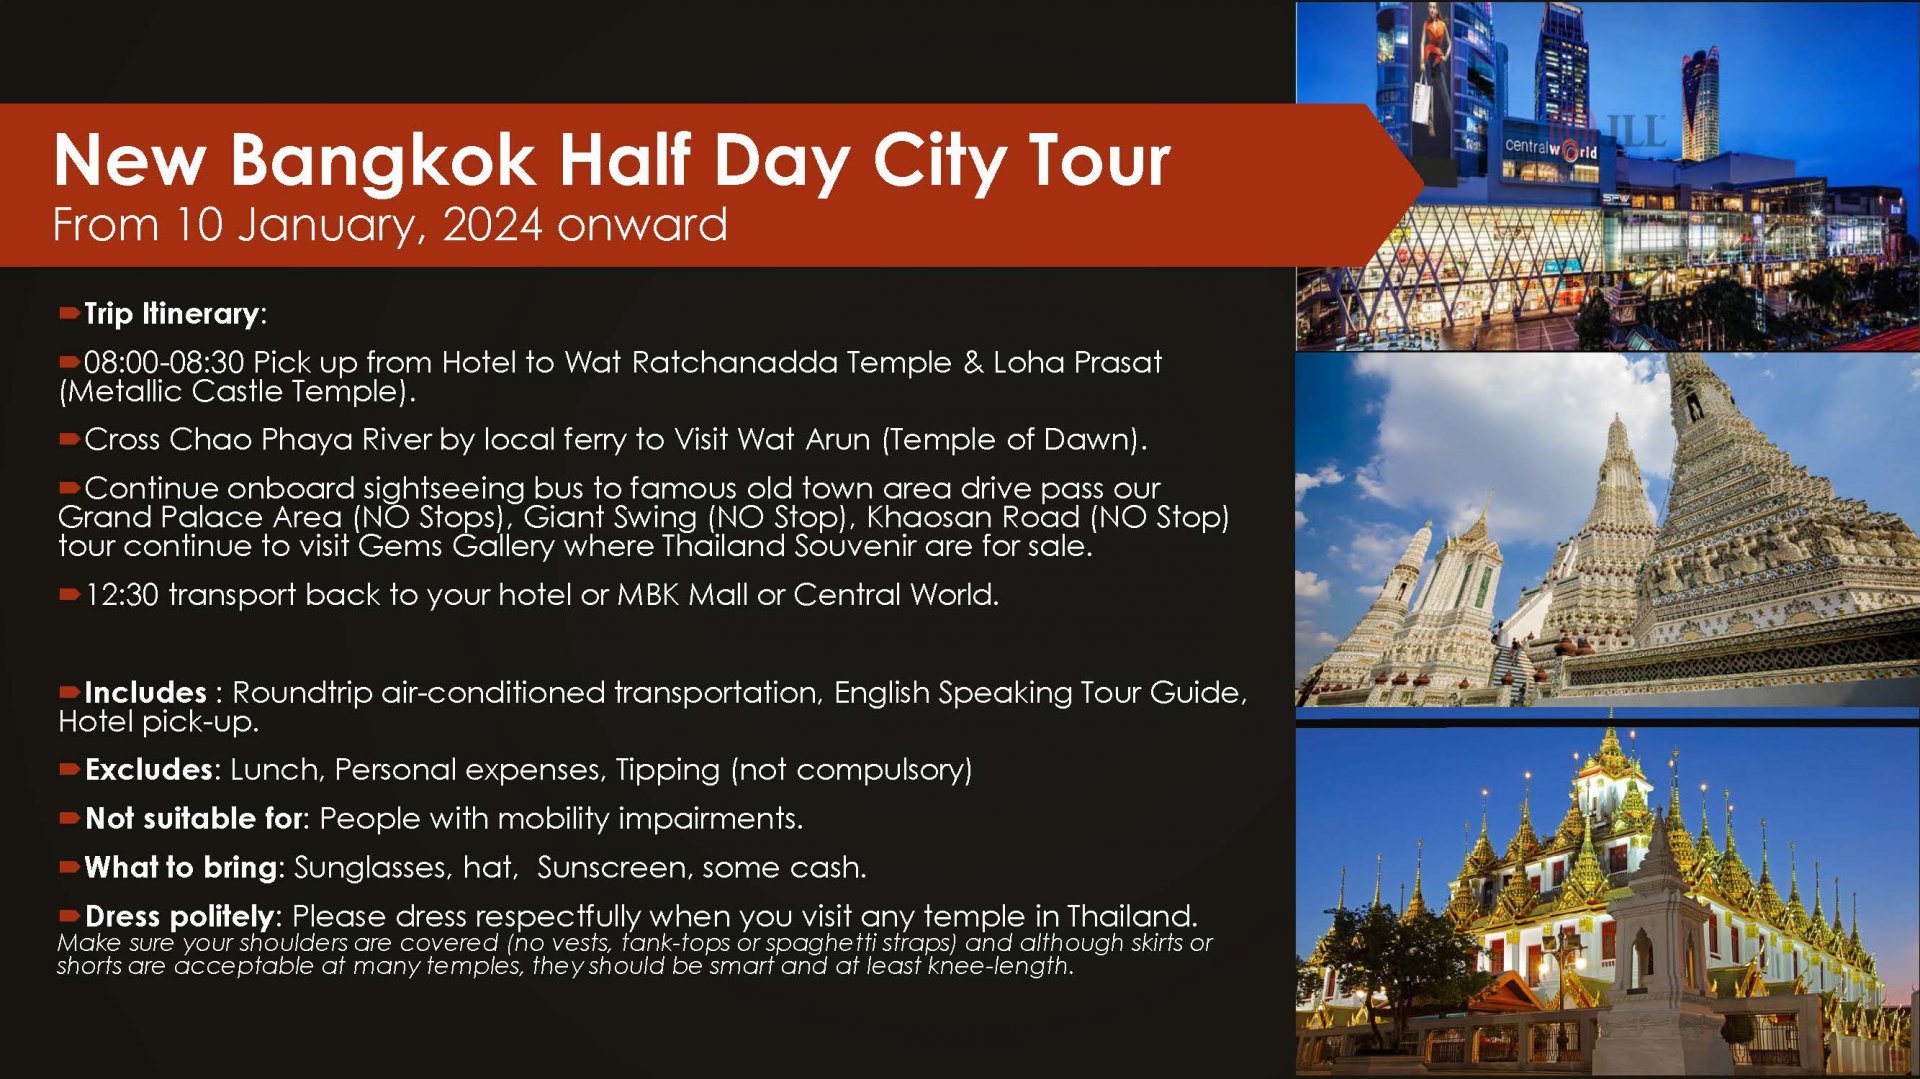 New Bangkok Half Day City Tour 